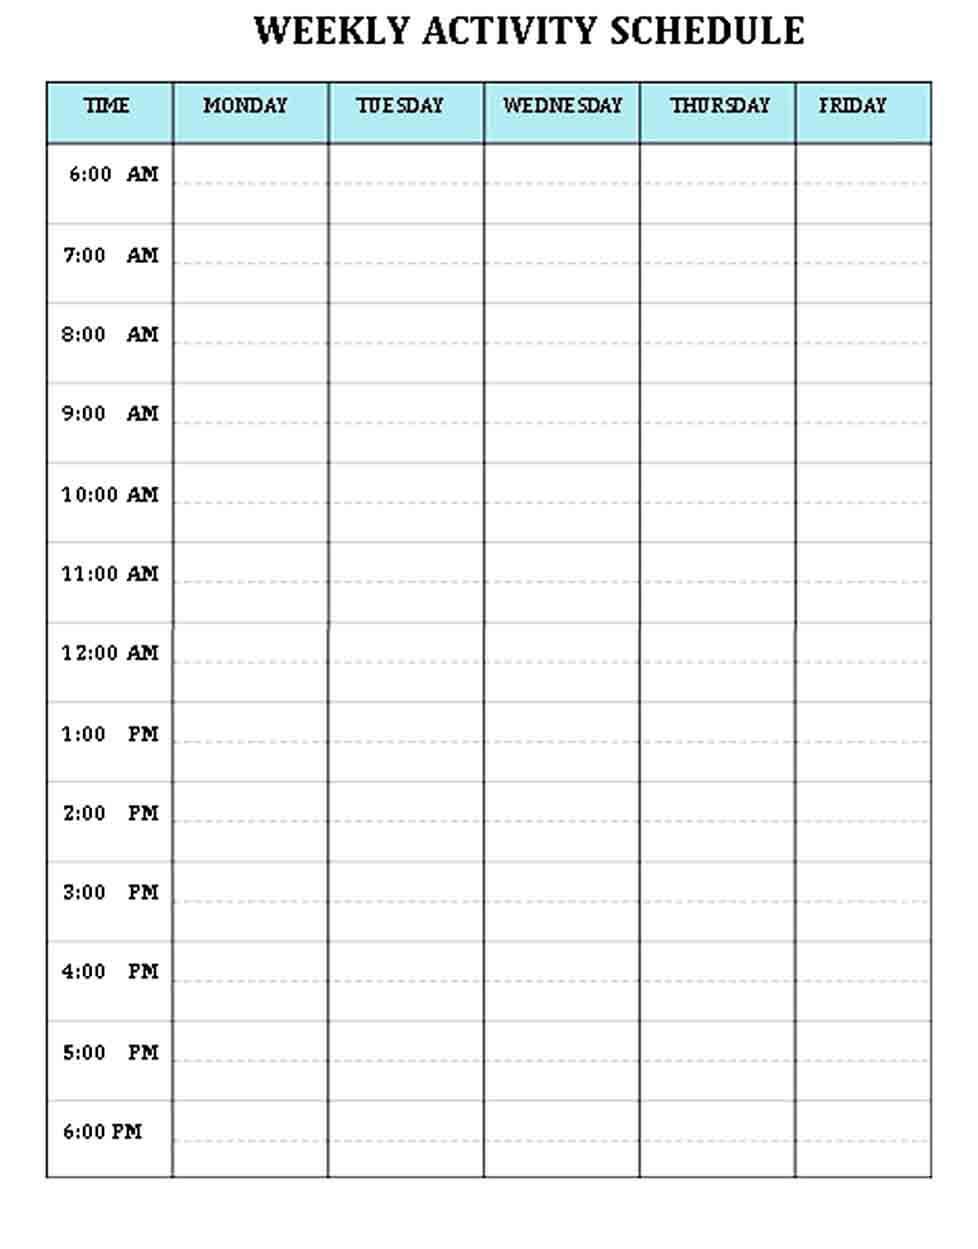 Weekly activity schedule PDF